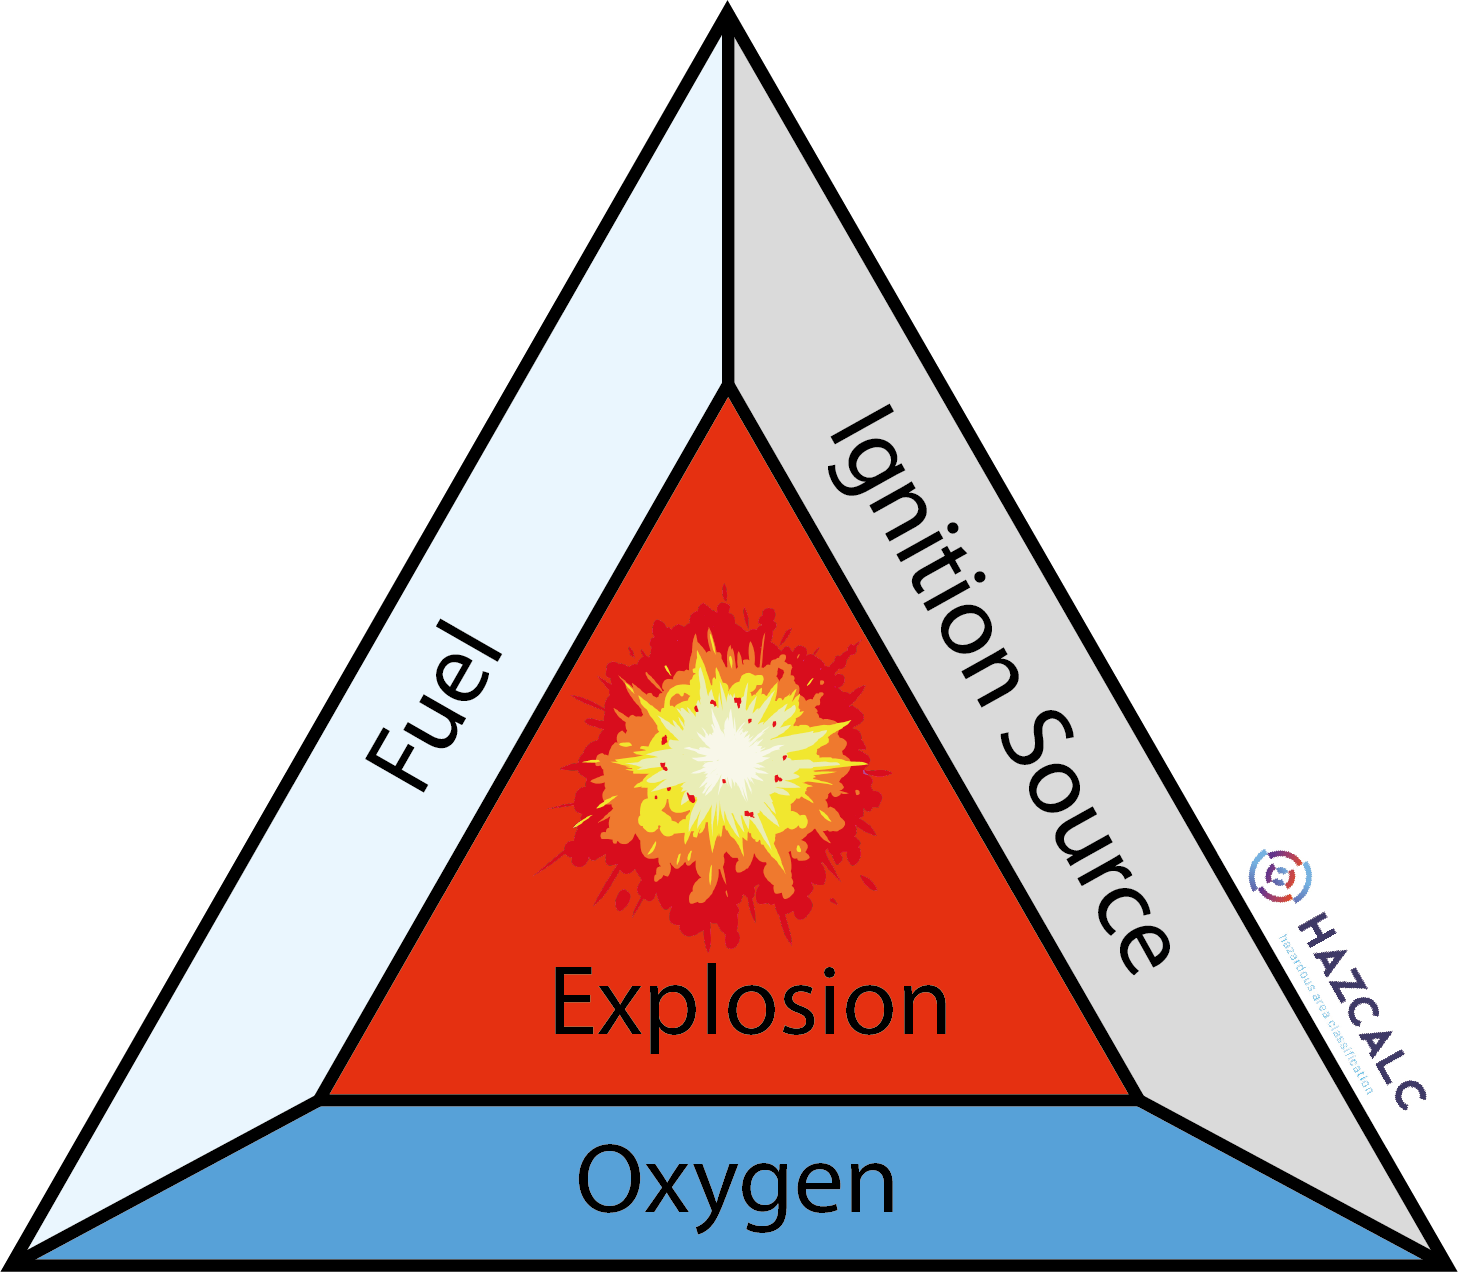 Explosion triangle